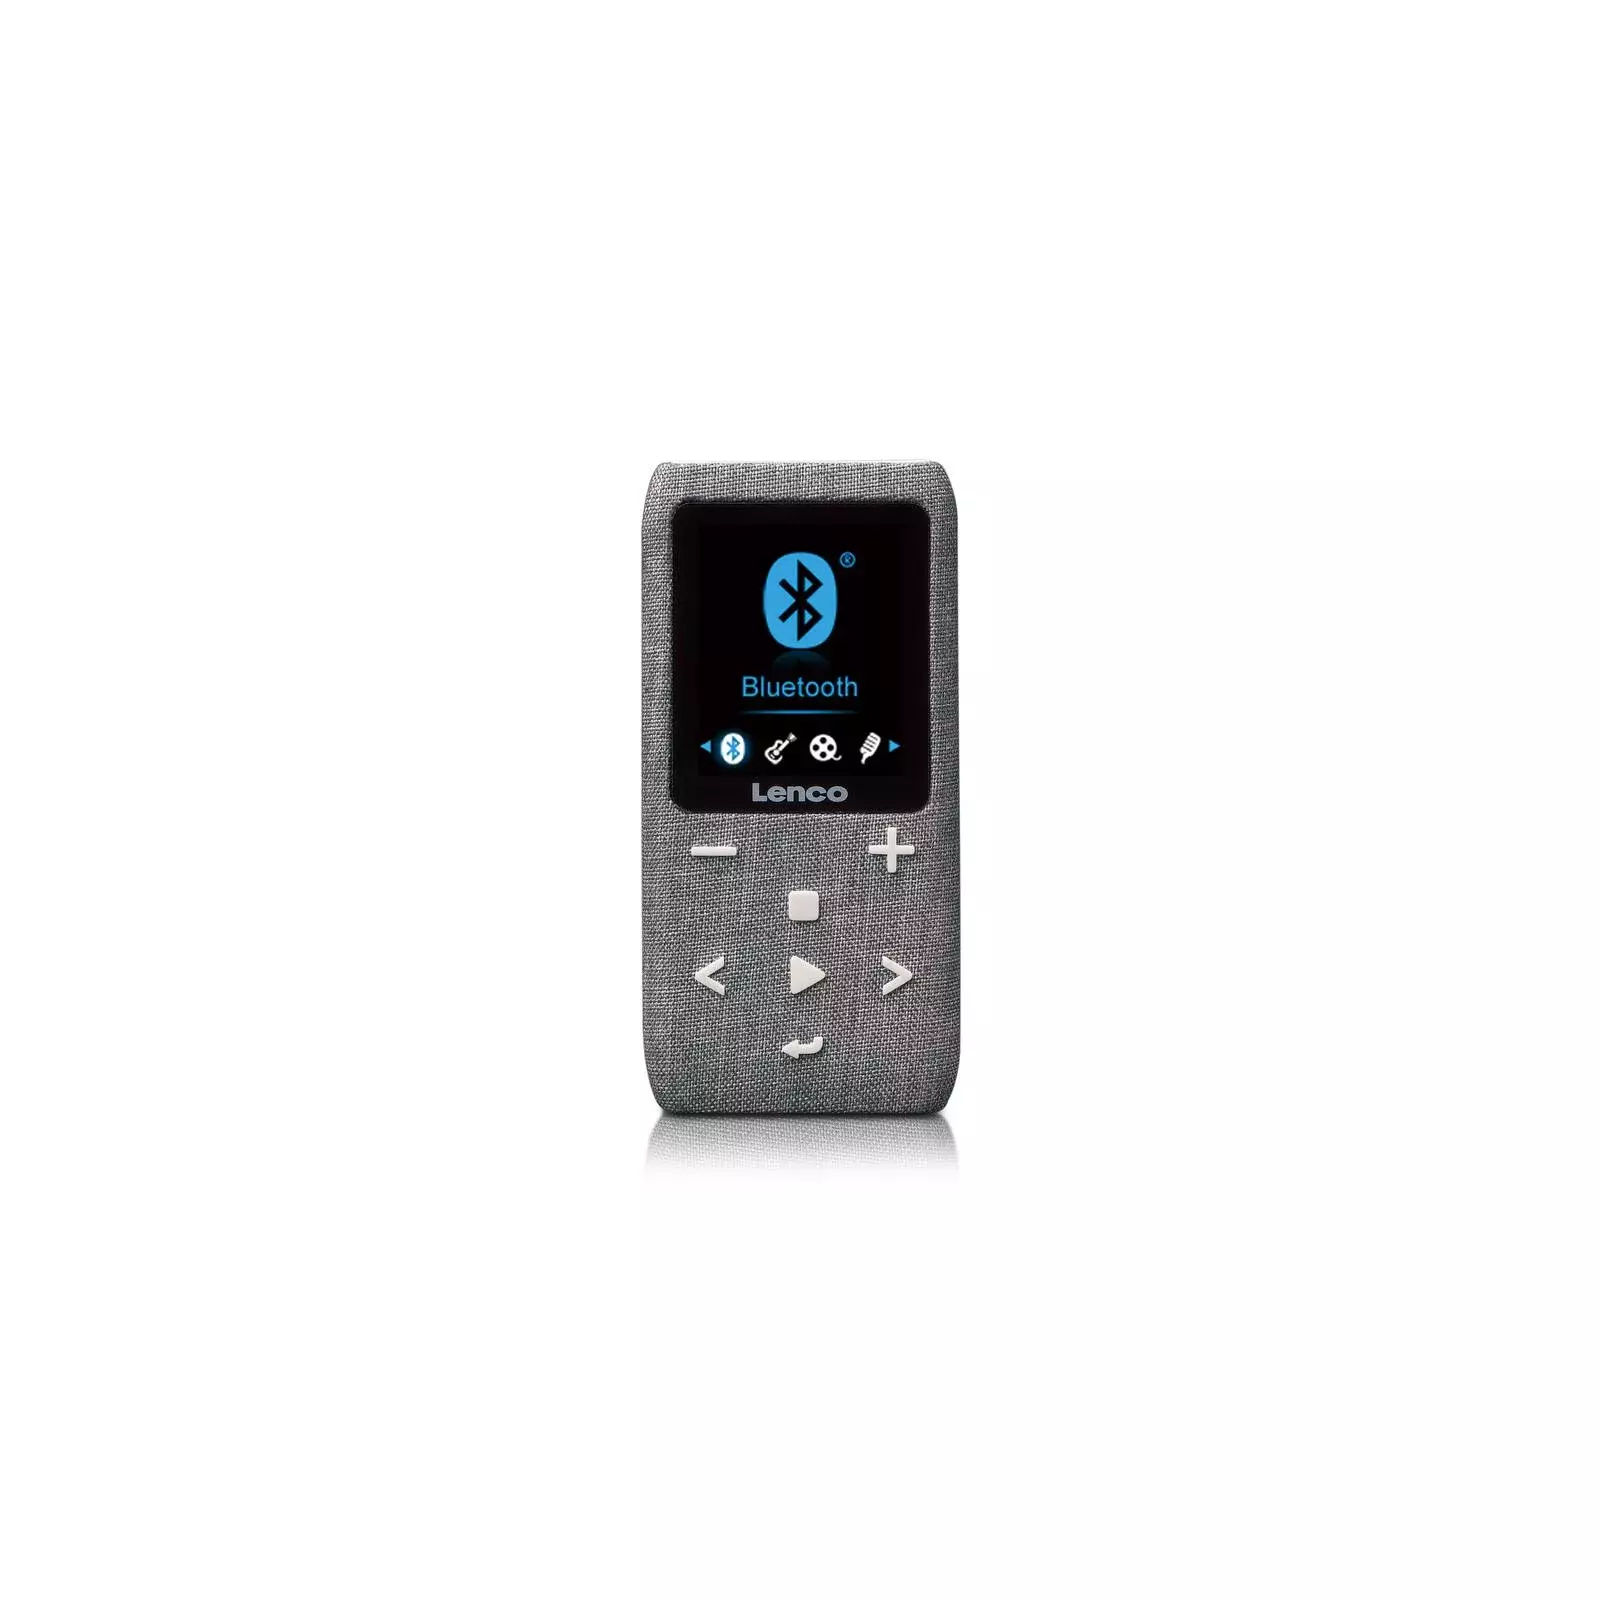 Lenco Xemio-861 MP4 player 8 MP3 players | MP4 A003234 